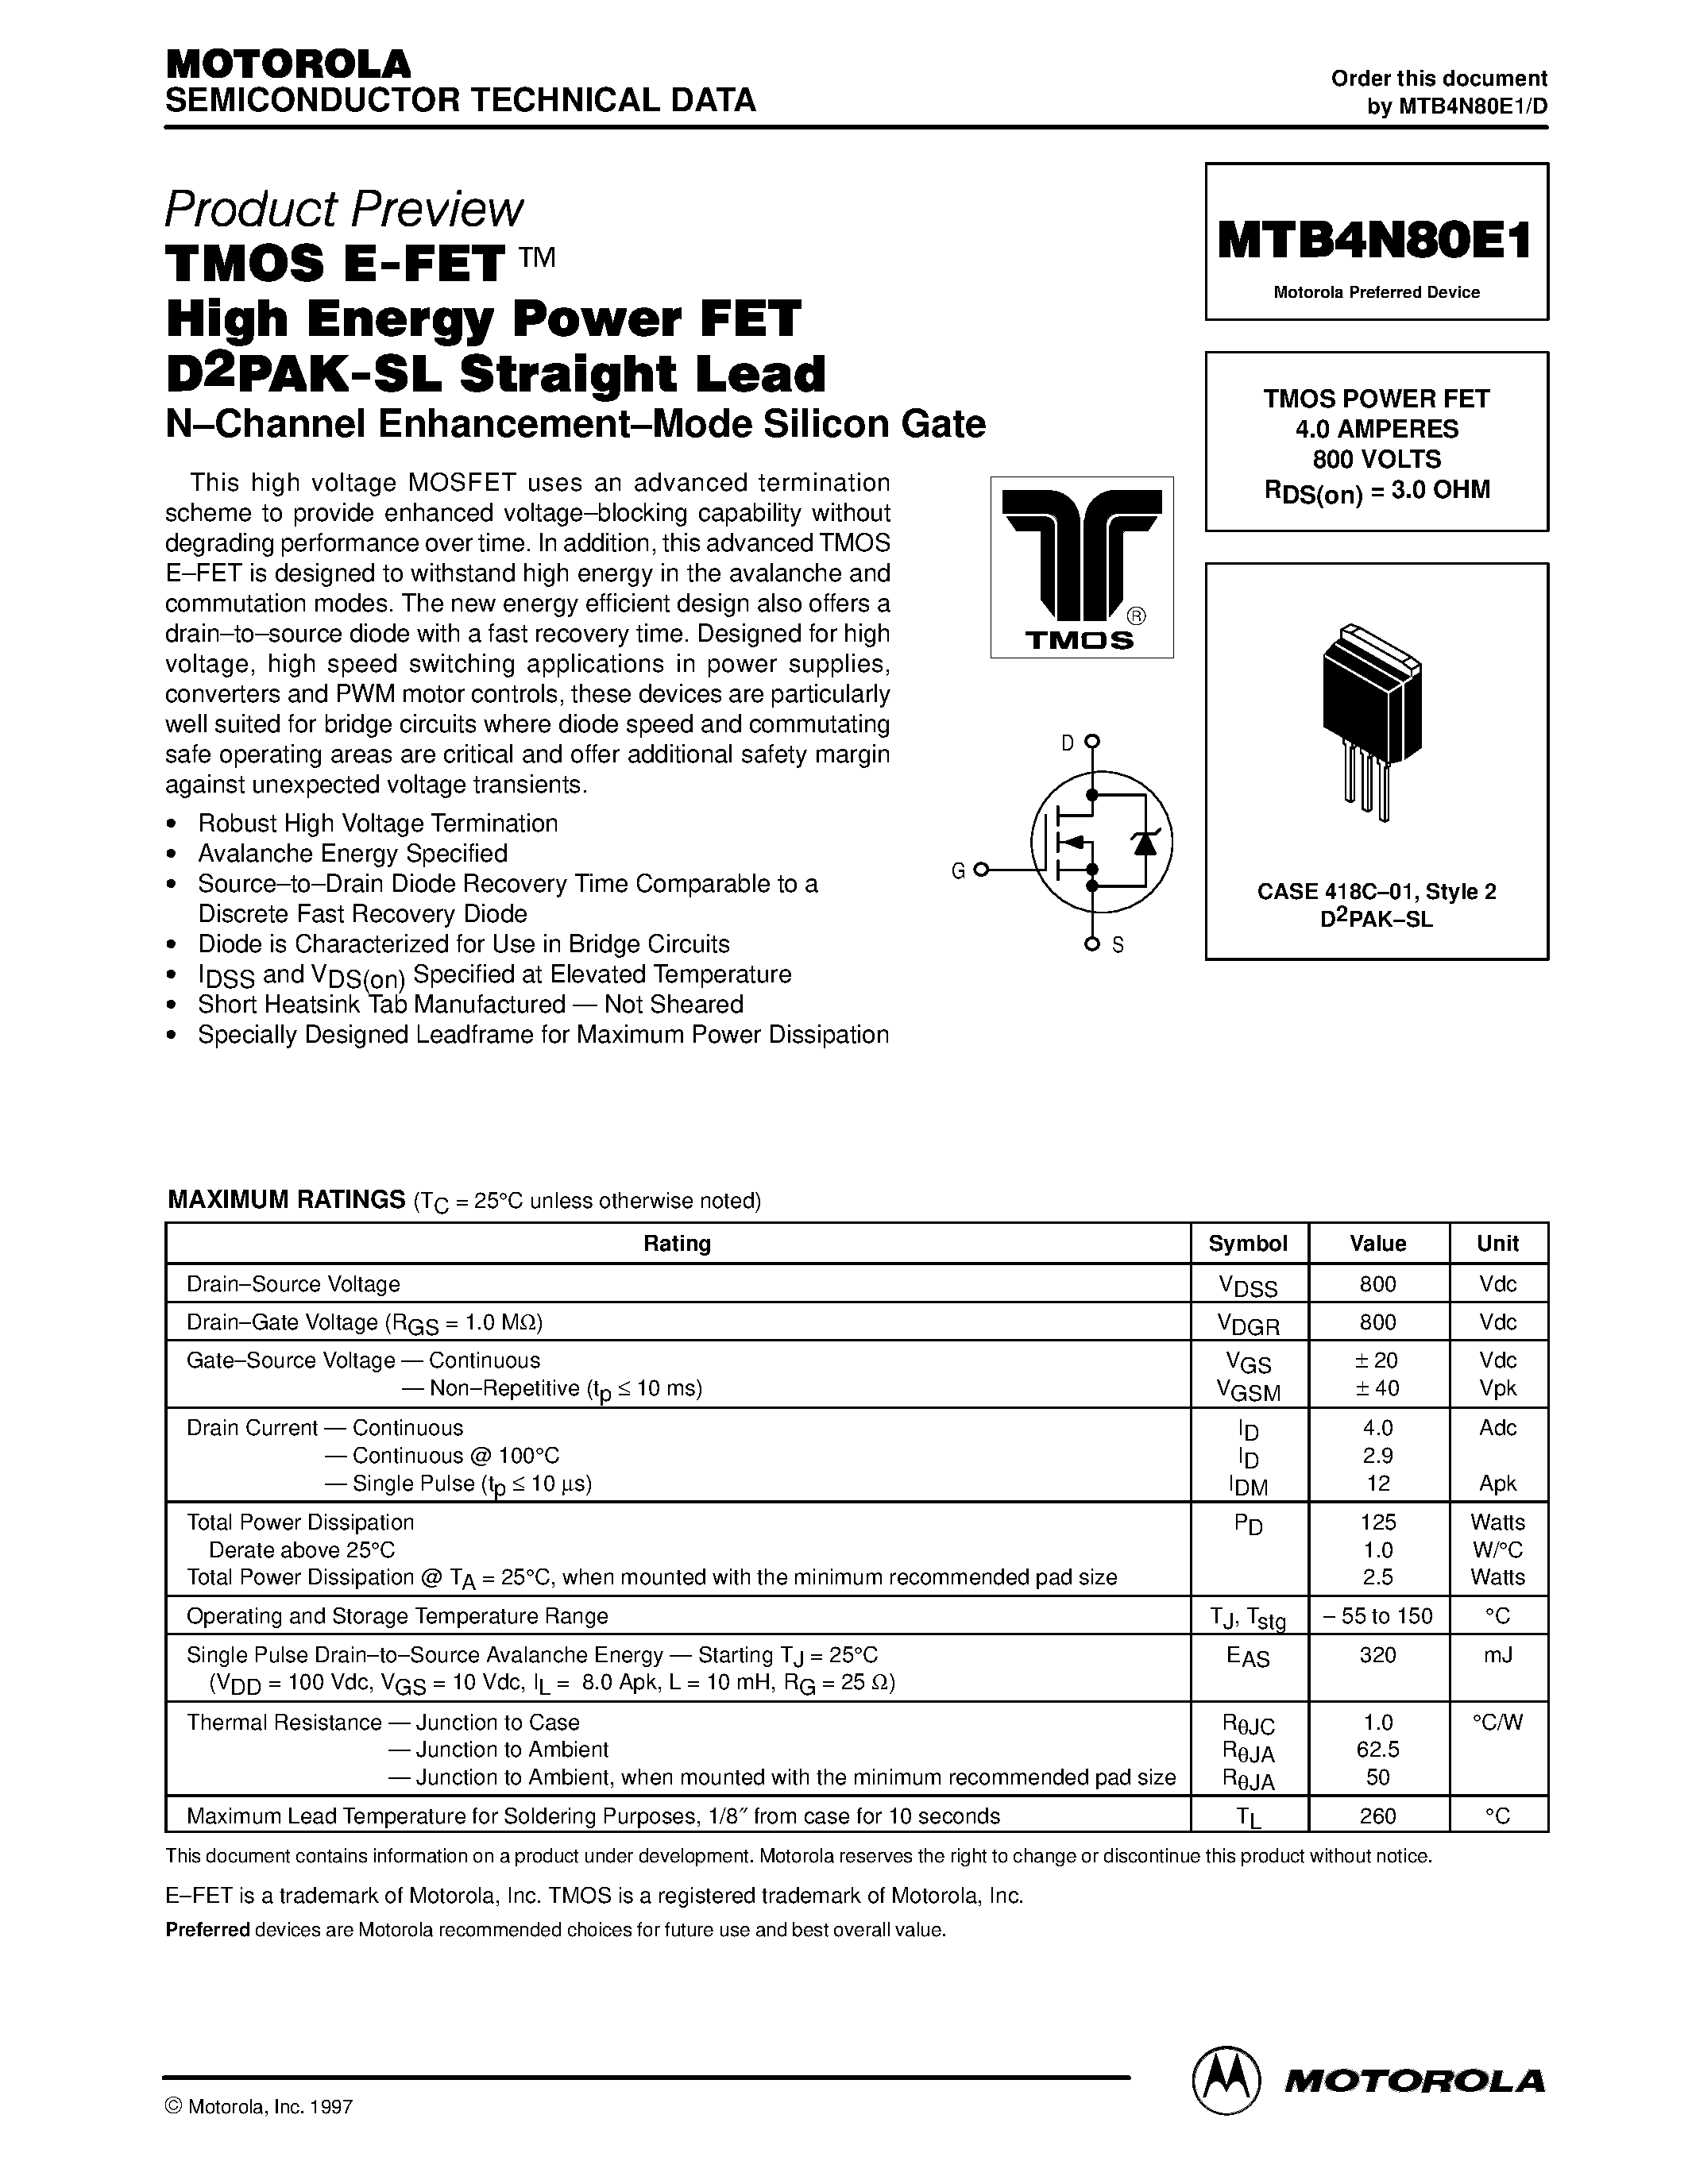 Даташит MTB4N80E1 - TMOS POWER FET 4.0 AMPERES 800 VOLTS страница 1